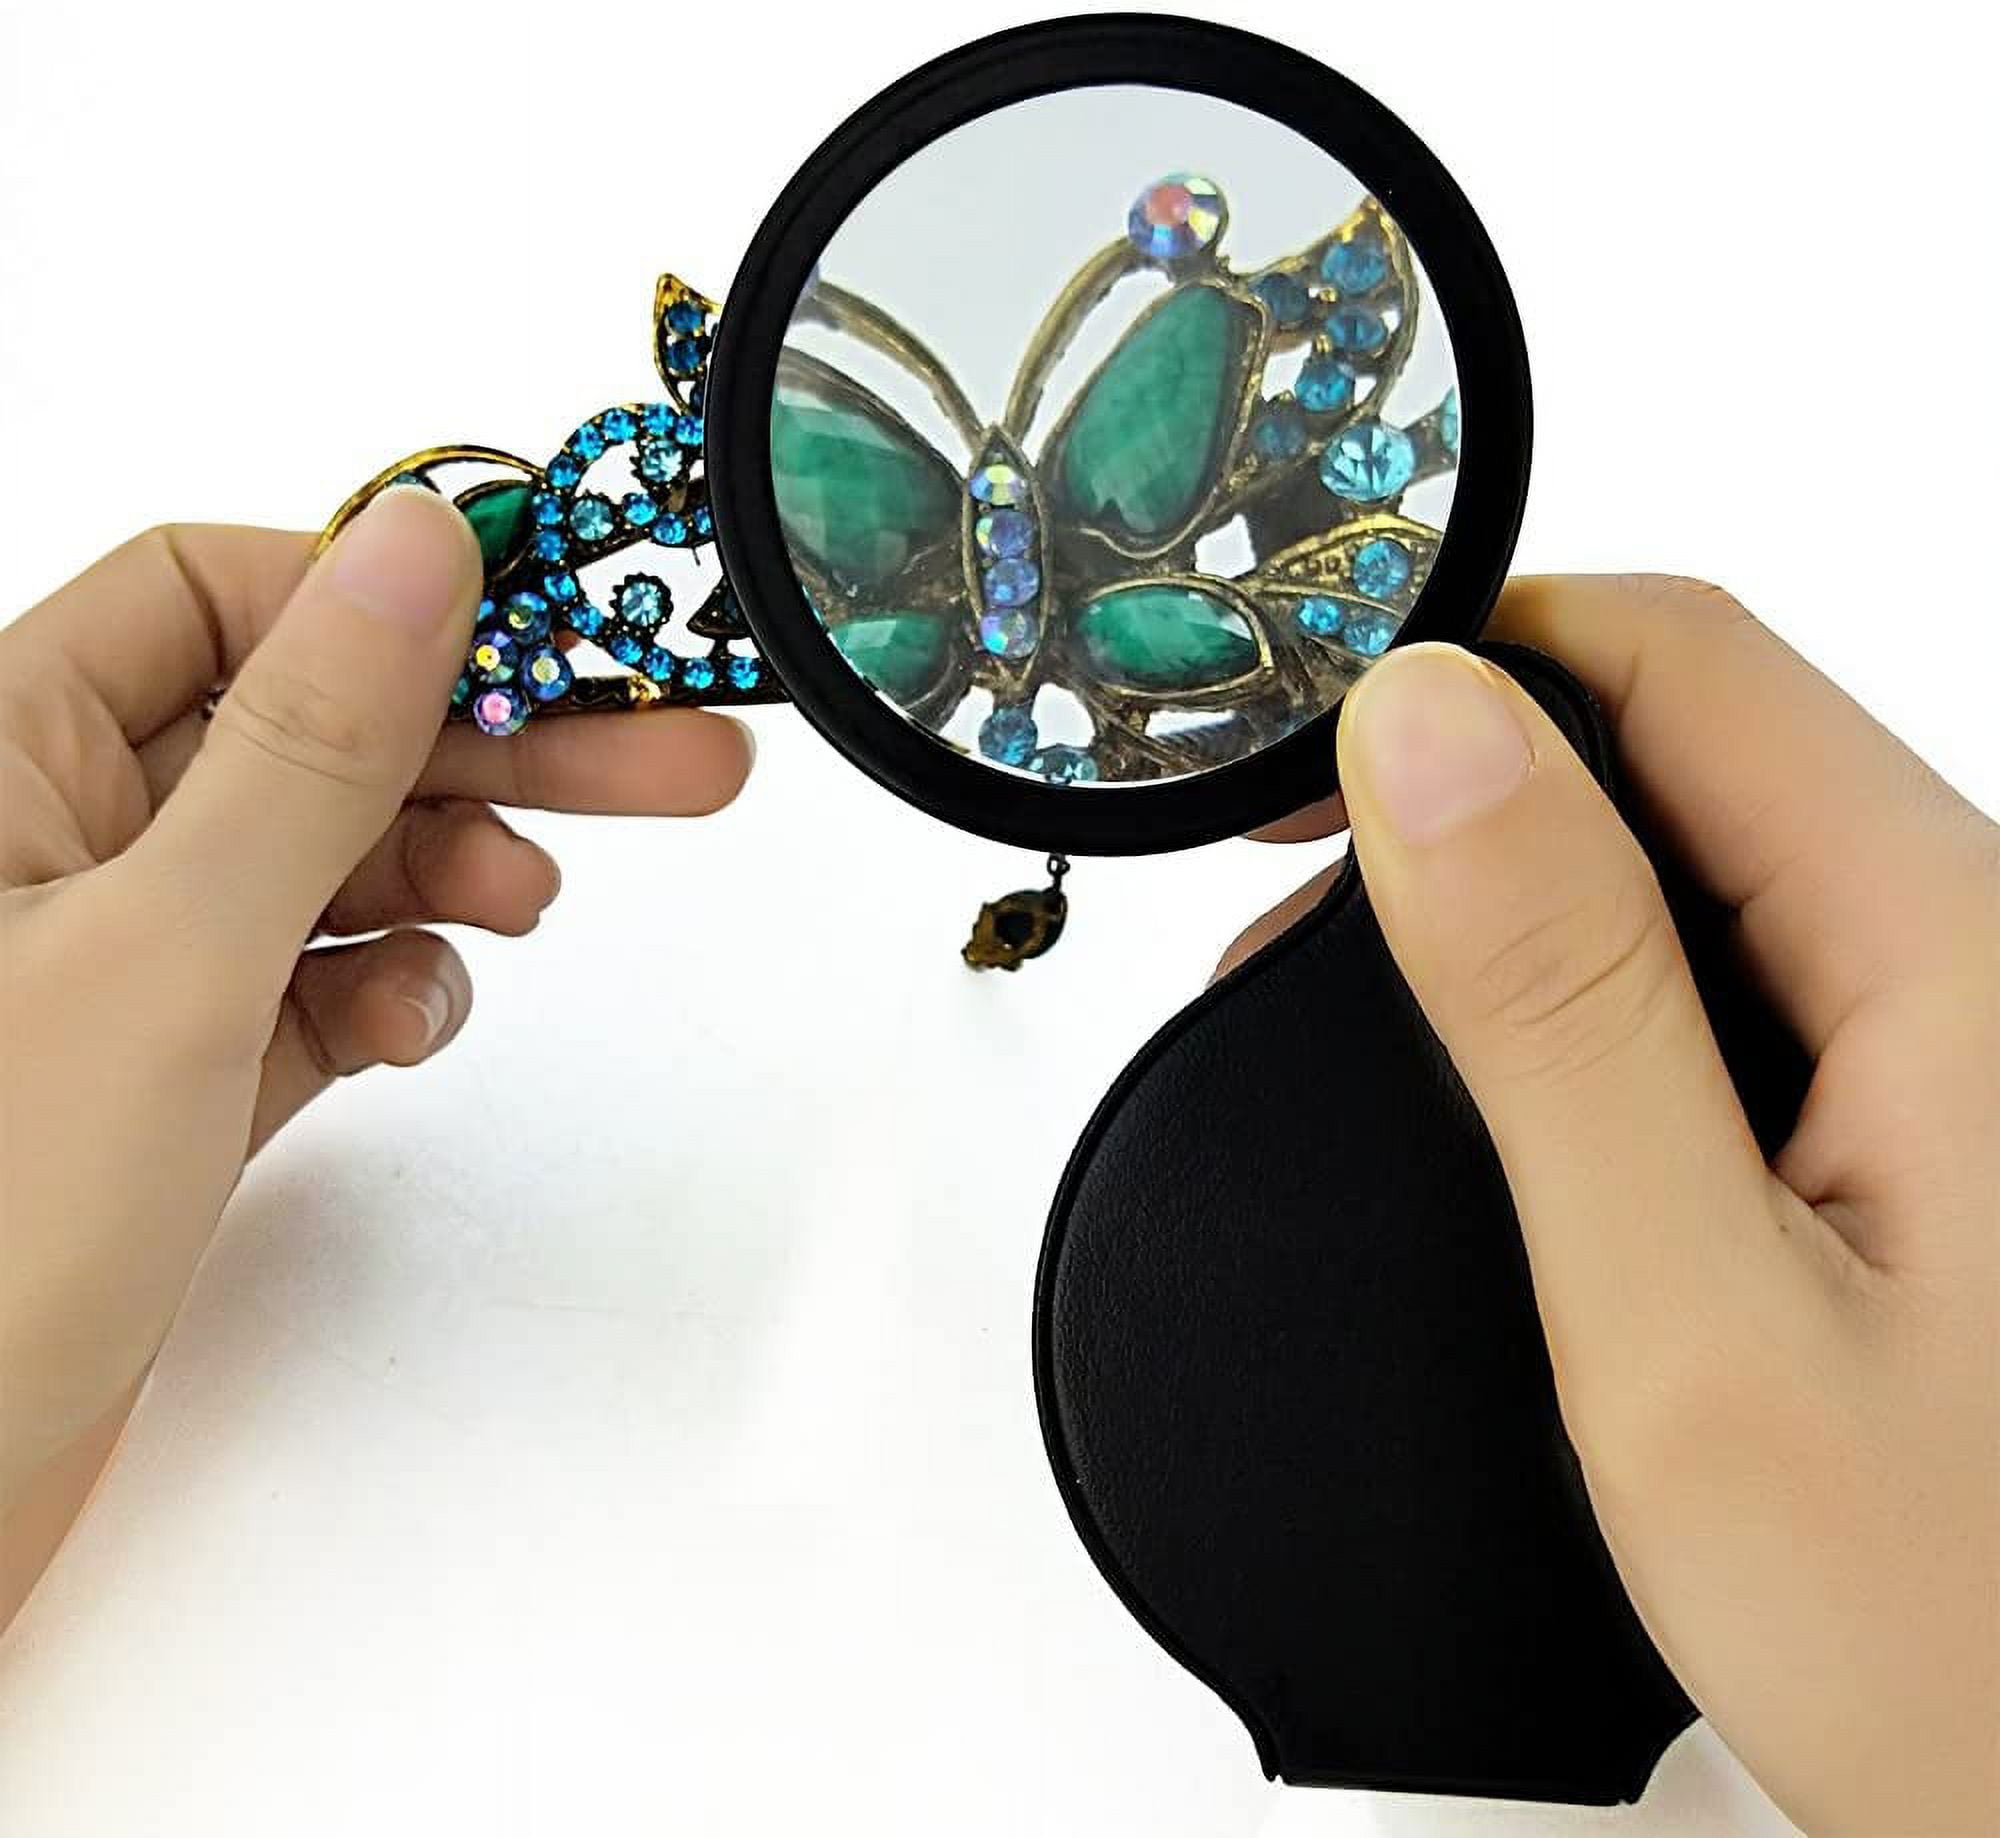 10x/20x/30x Kcute Jewelers Magnifying Glass Pocket Magnifier, Mini